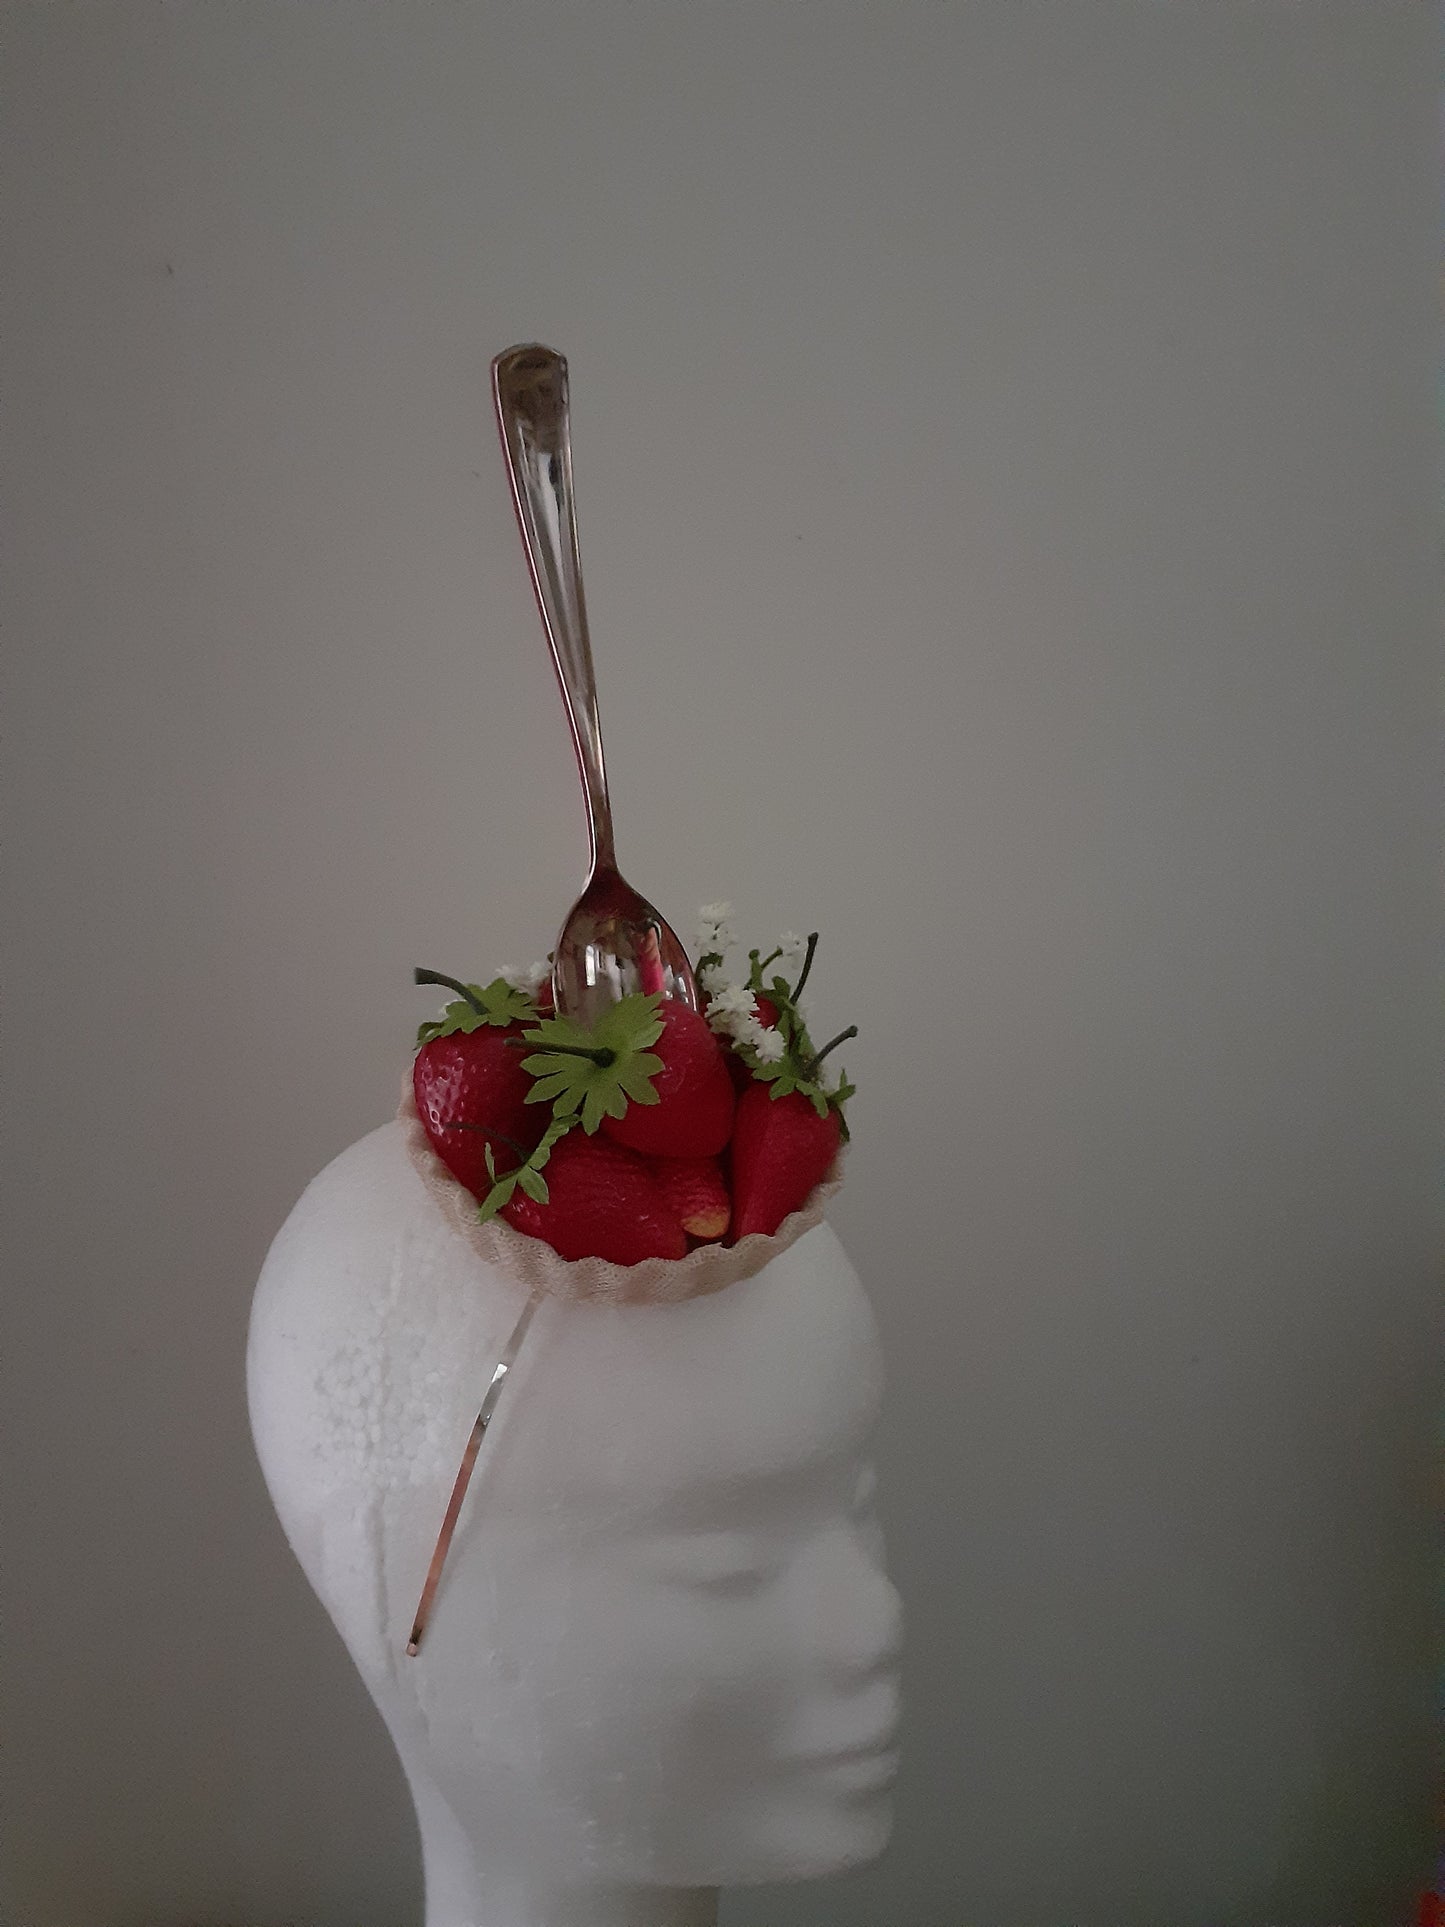 Strawberry tart headpiece